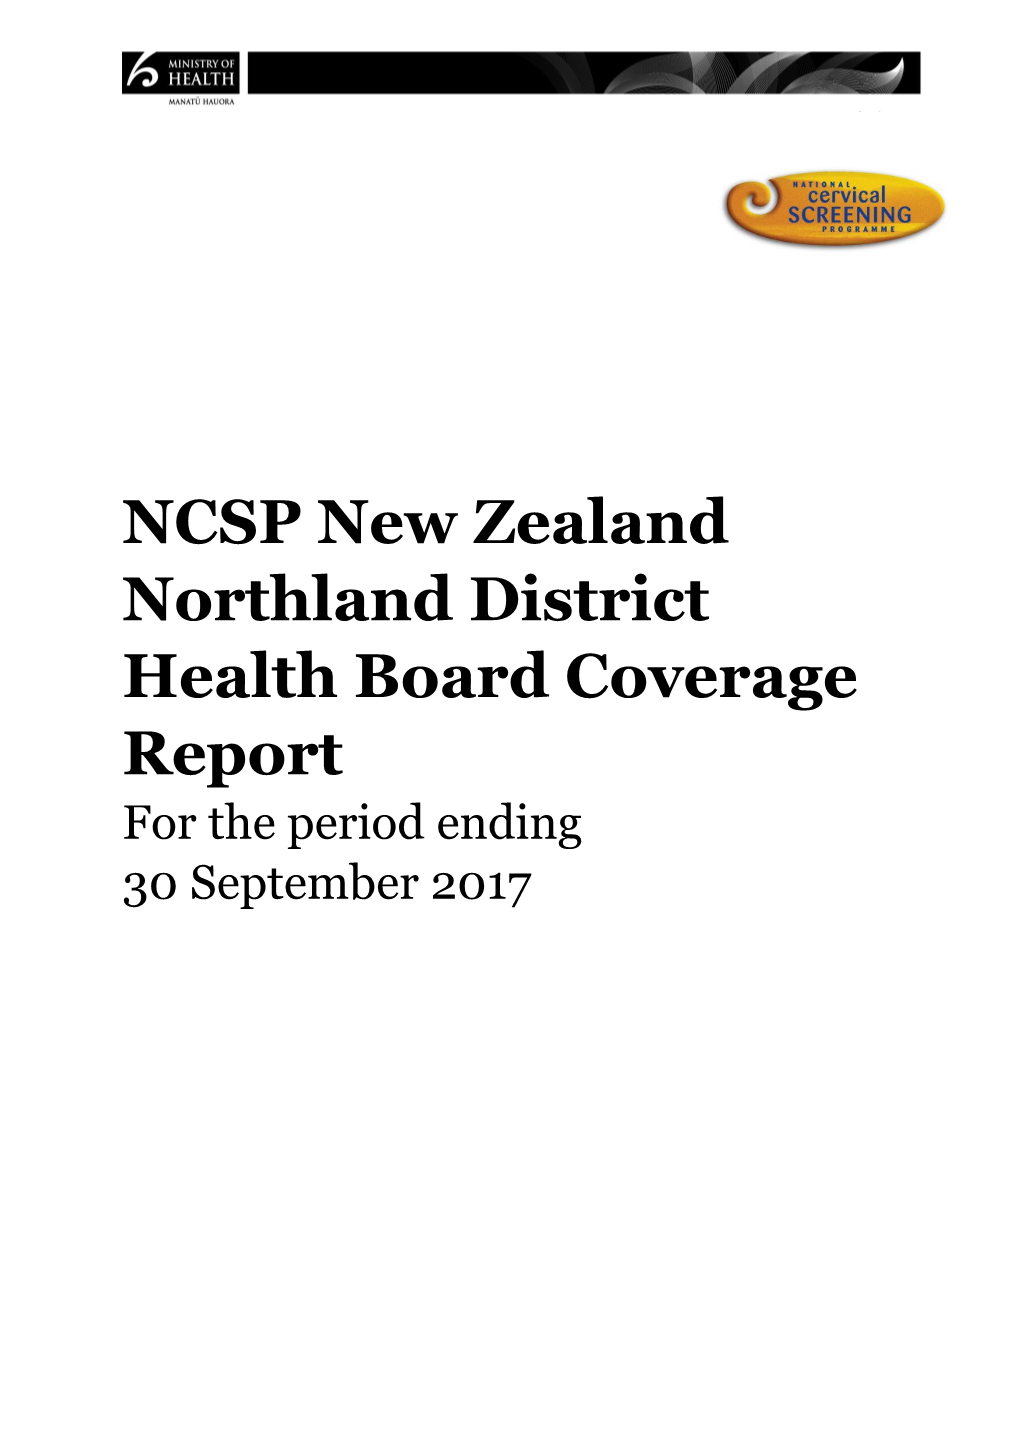 NCSP New Zealand Northland District Health Boardcoverage Report